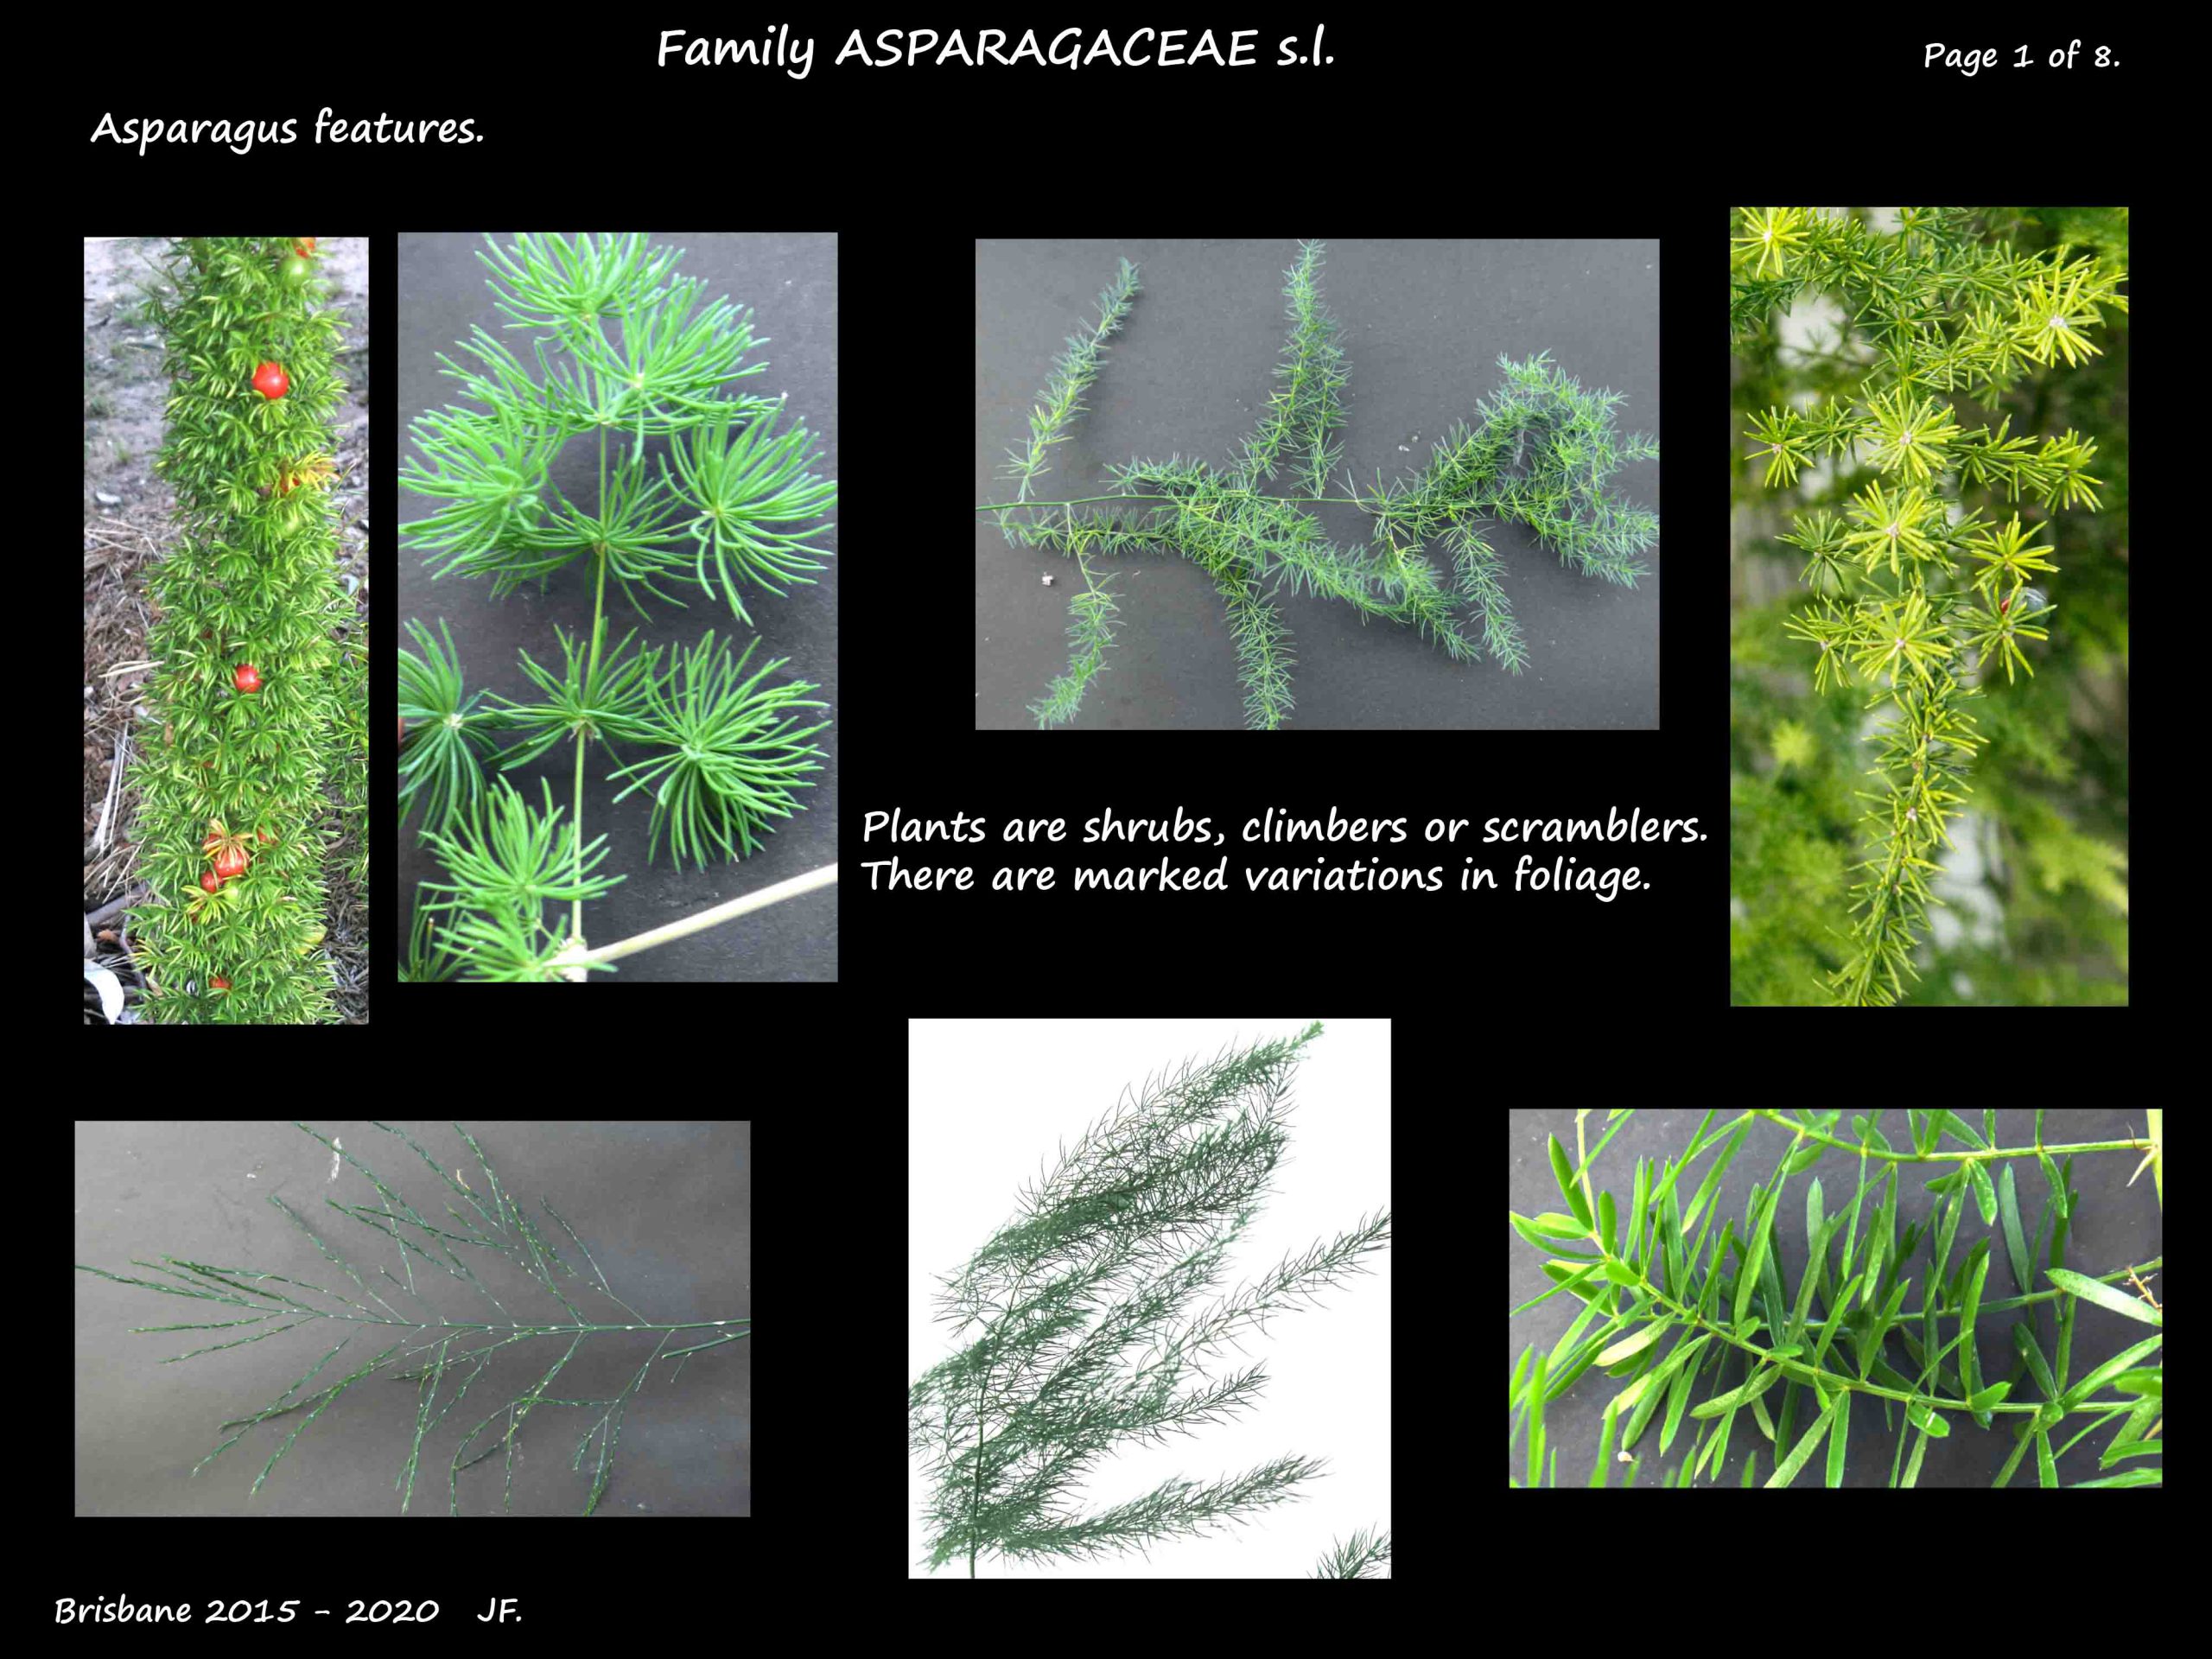 1 Asparagus plants